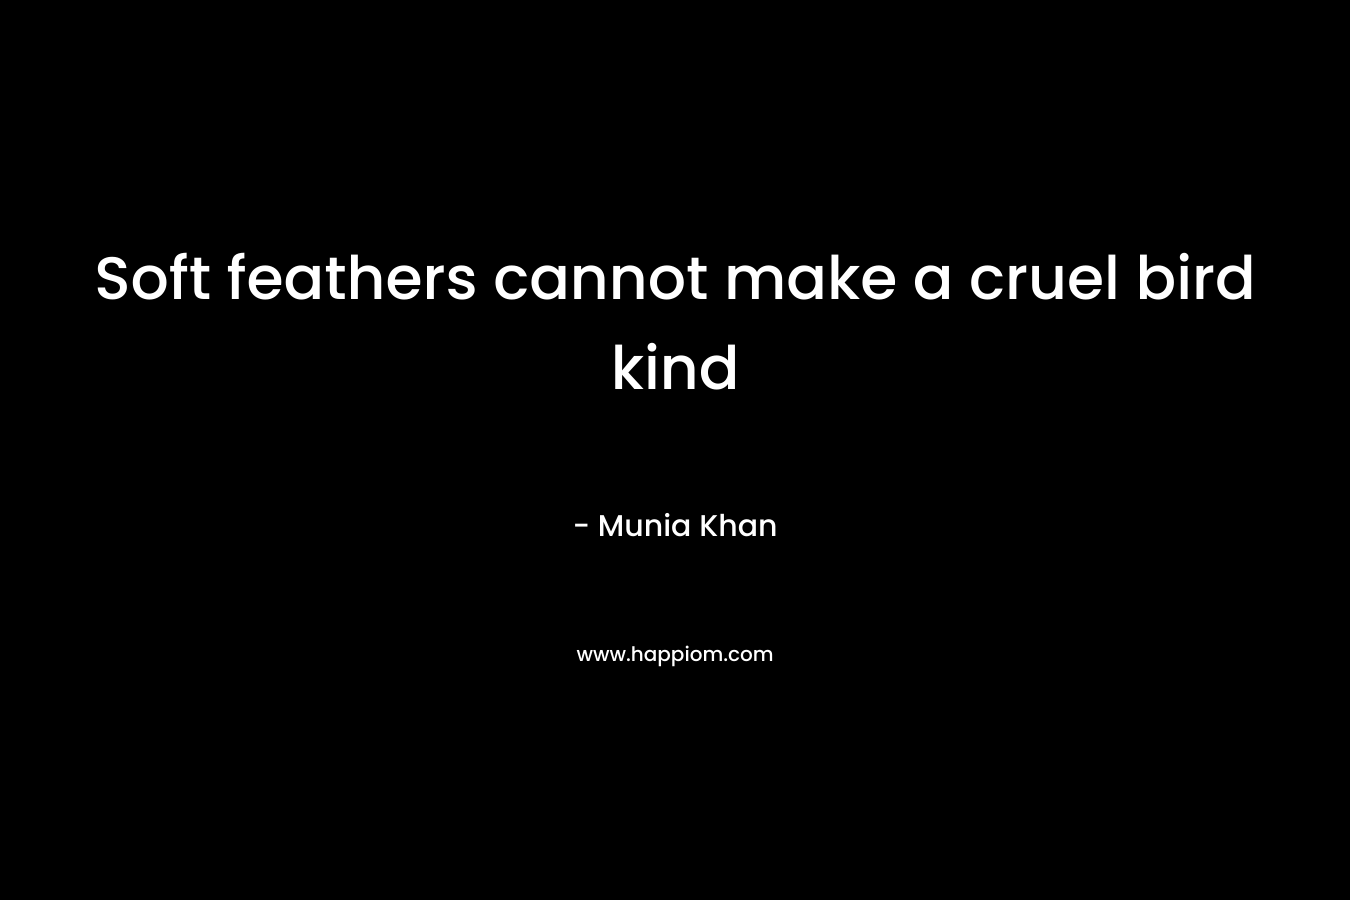 Soft feathers cannot make a cruel bird kind